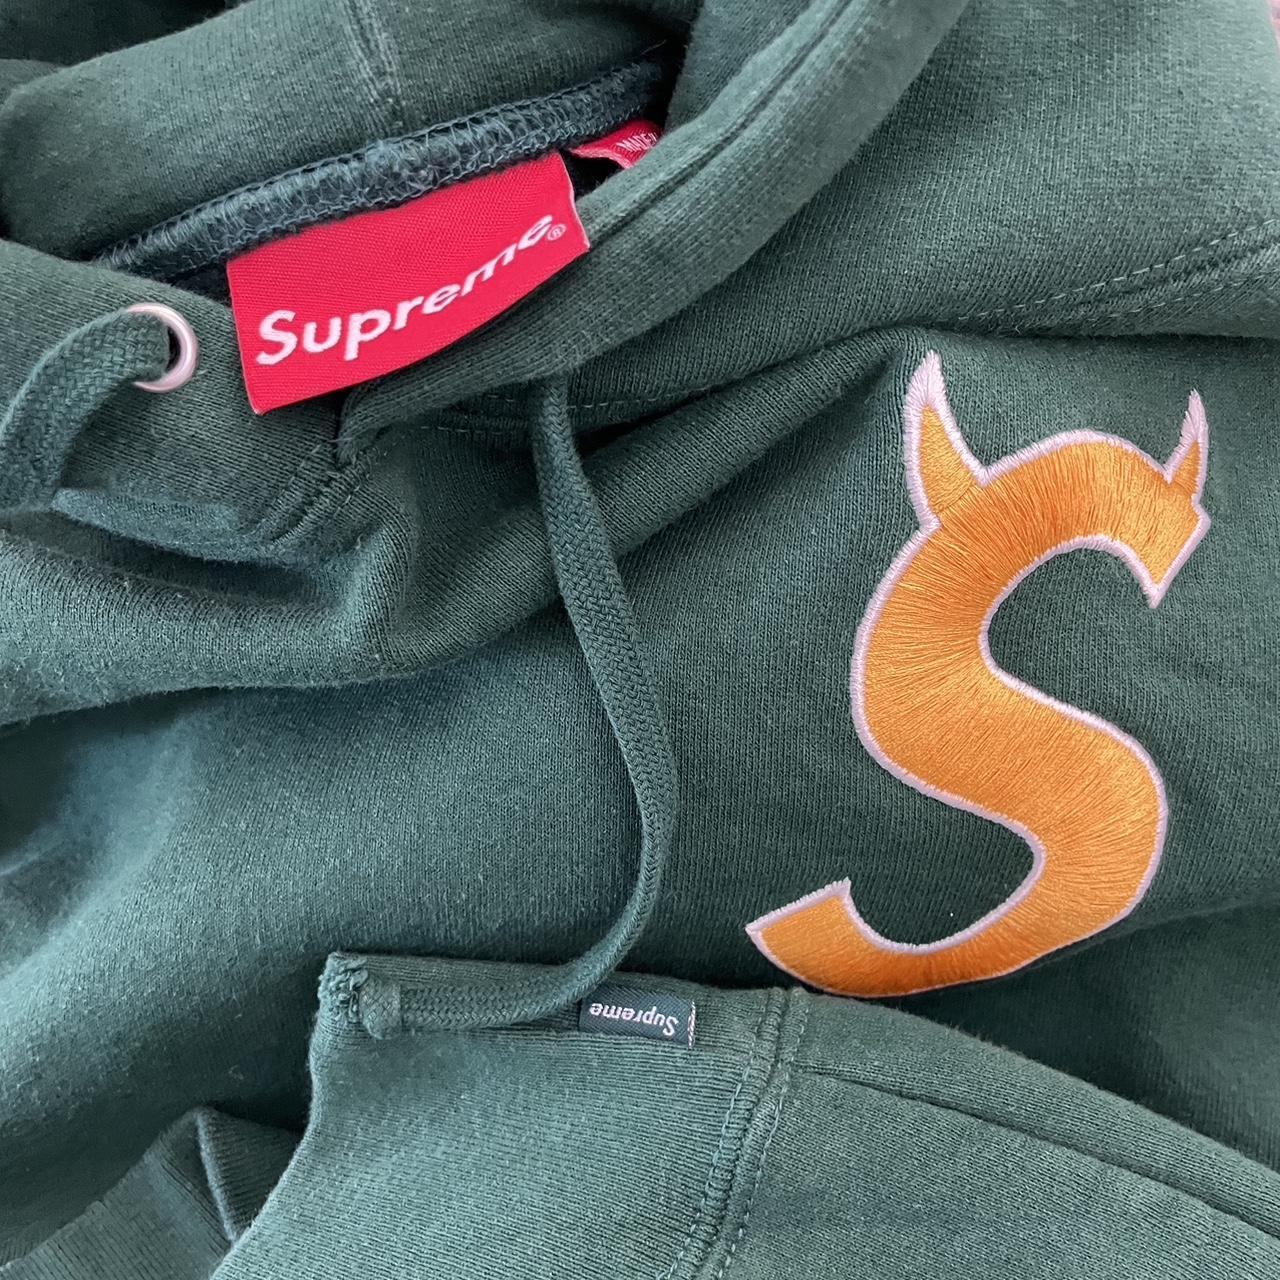 Supreme S Logo Hoodie